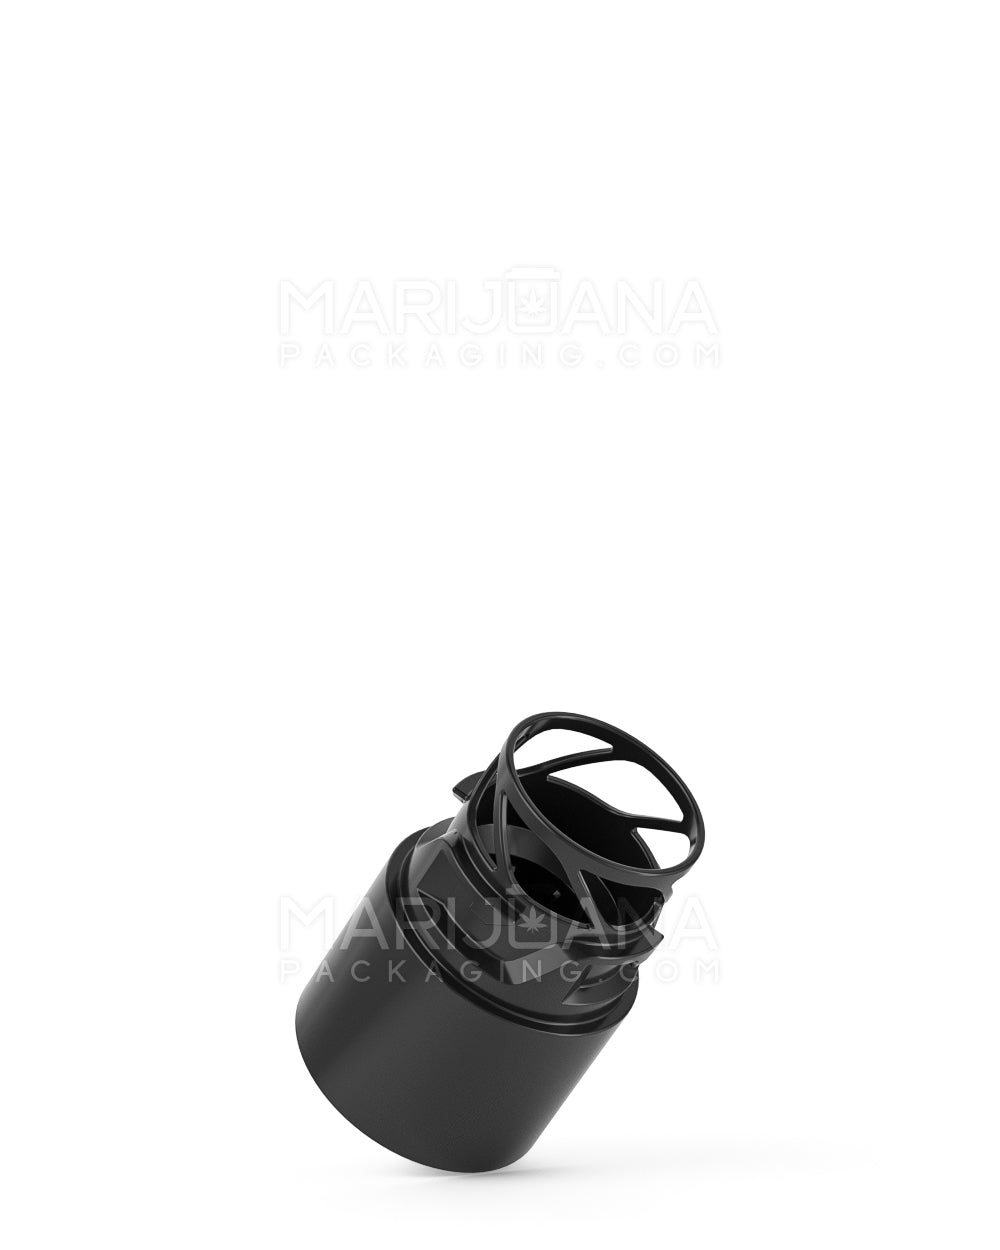 POLLEN GEAR | KAPSŪLA Vape Cartridge Tube Base | 84mm - Black - 1450 Count